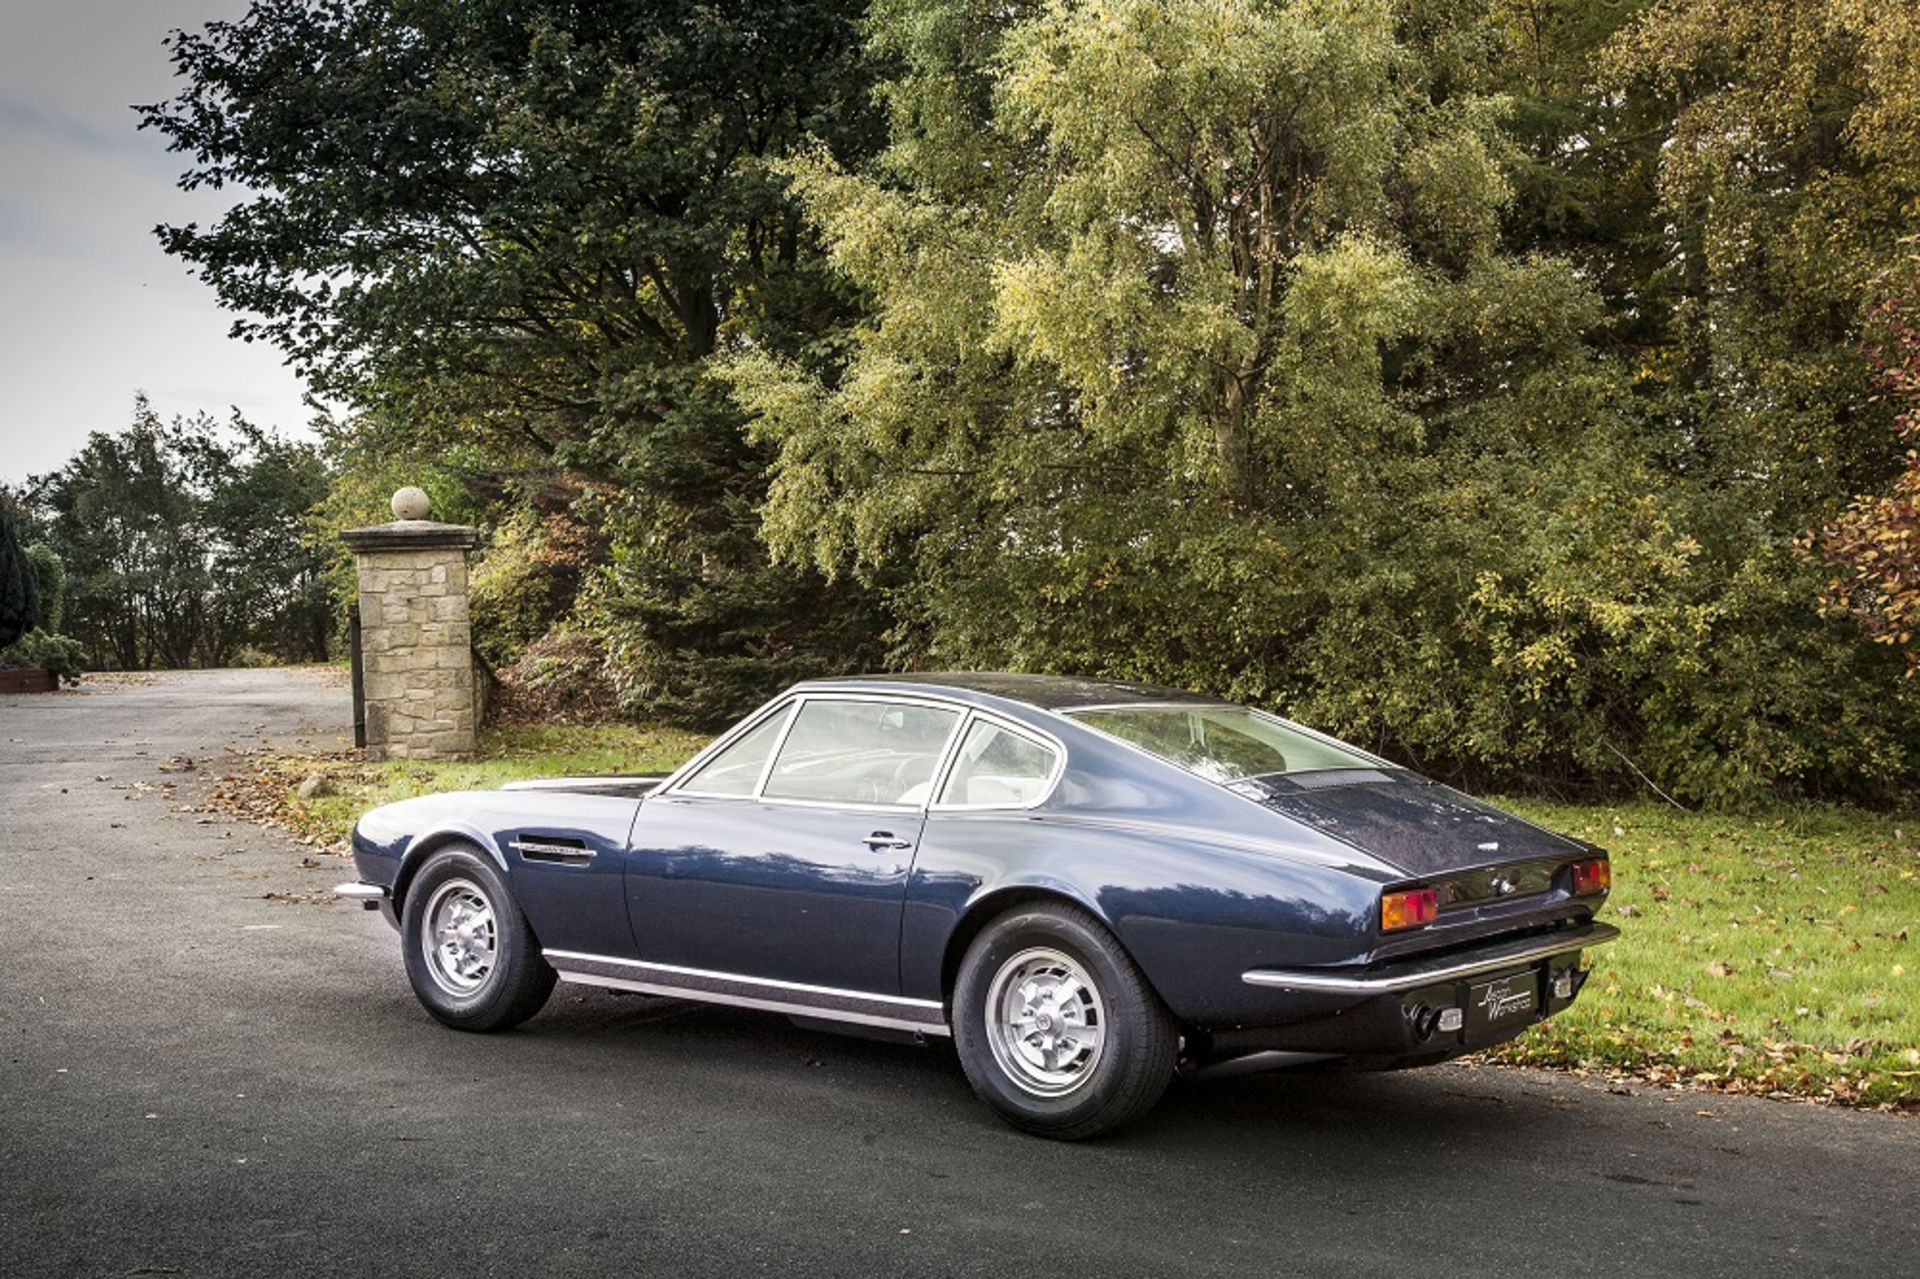 1973 Aston Martin V8 Series II Auto - Low mileage and restored - Image 3 of 17